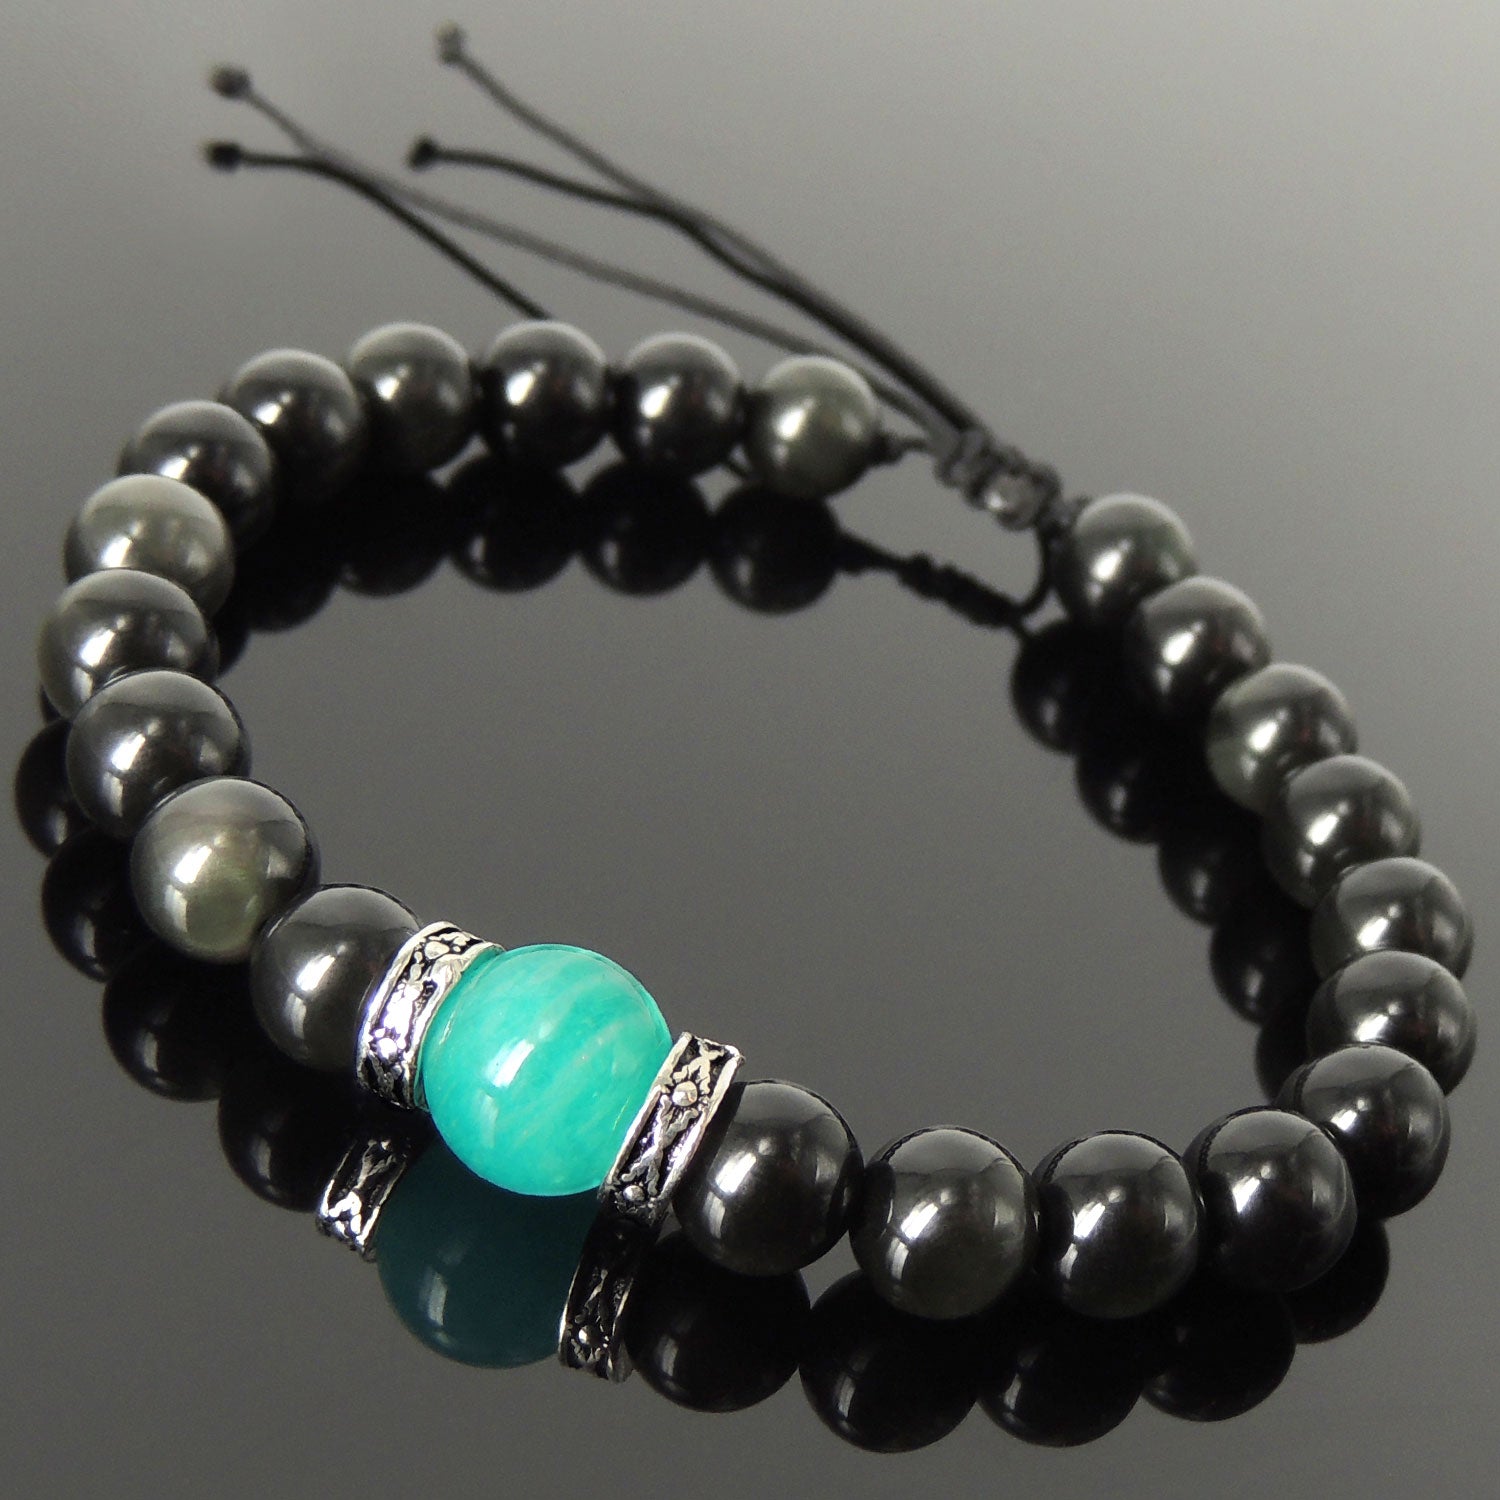 Vintage Design Handmade Braided Gemstone Bracelet - Men's Women's Casual Wear, Healing with Amazonite, Rainbow Black Obsidian, Adjustable Drawstring, S925 Sterling Silver Spacer Beads BR1775